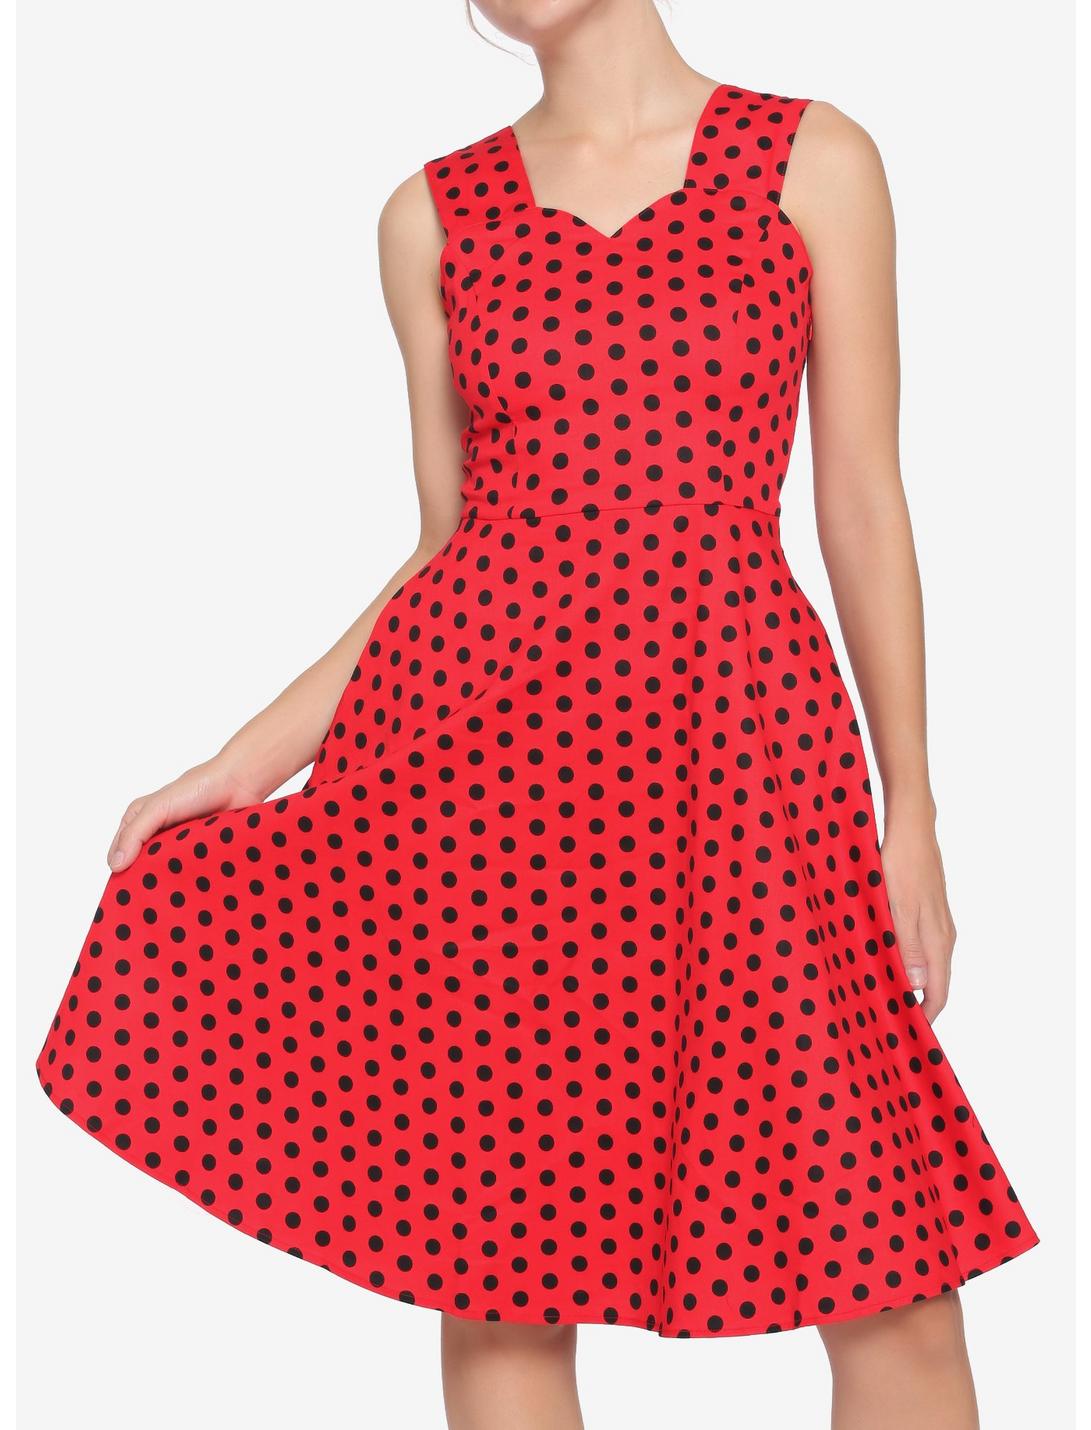 red and black polka dot dress